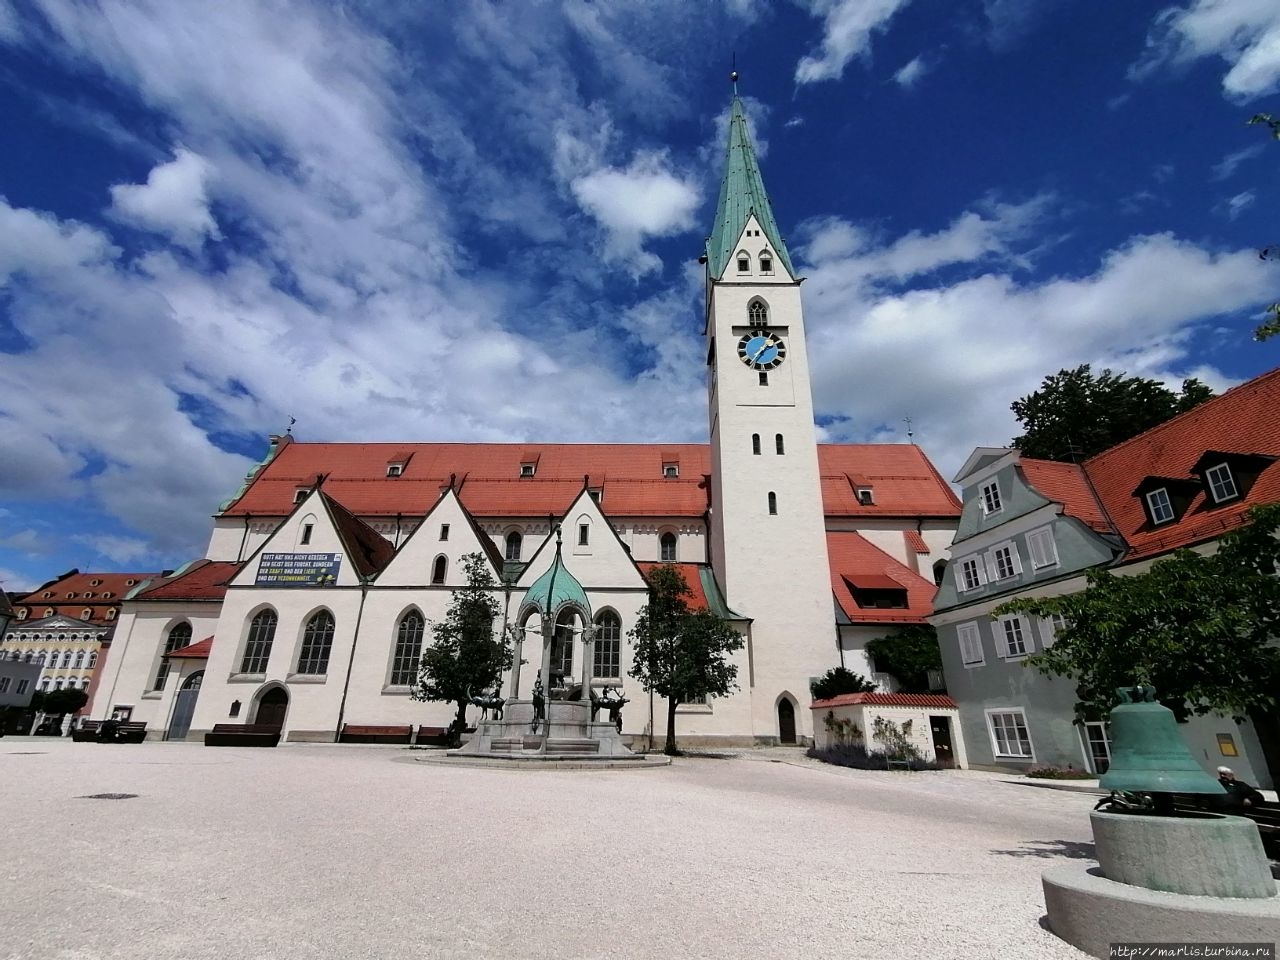 St.Mang-Kirche, справа здание евангелического Деканата (1810) Кемптен, Германия